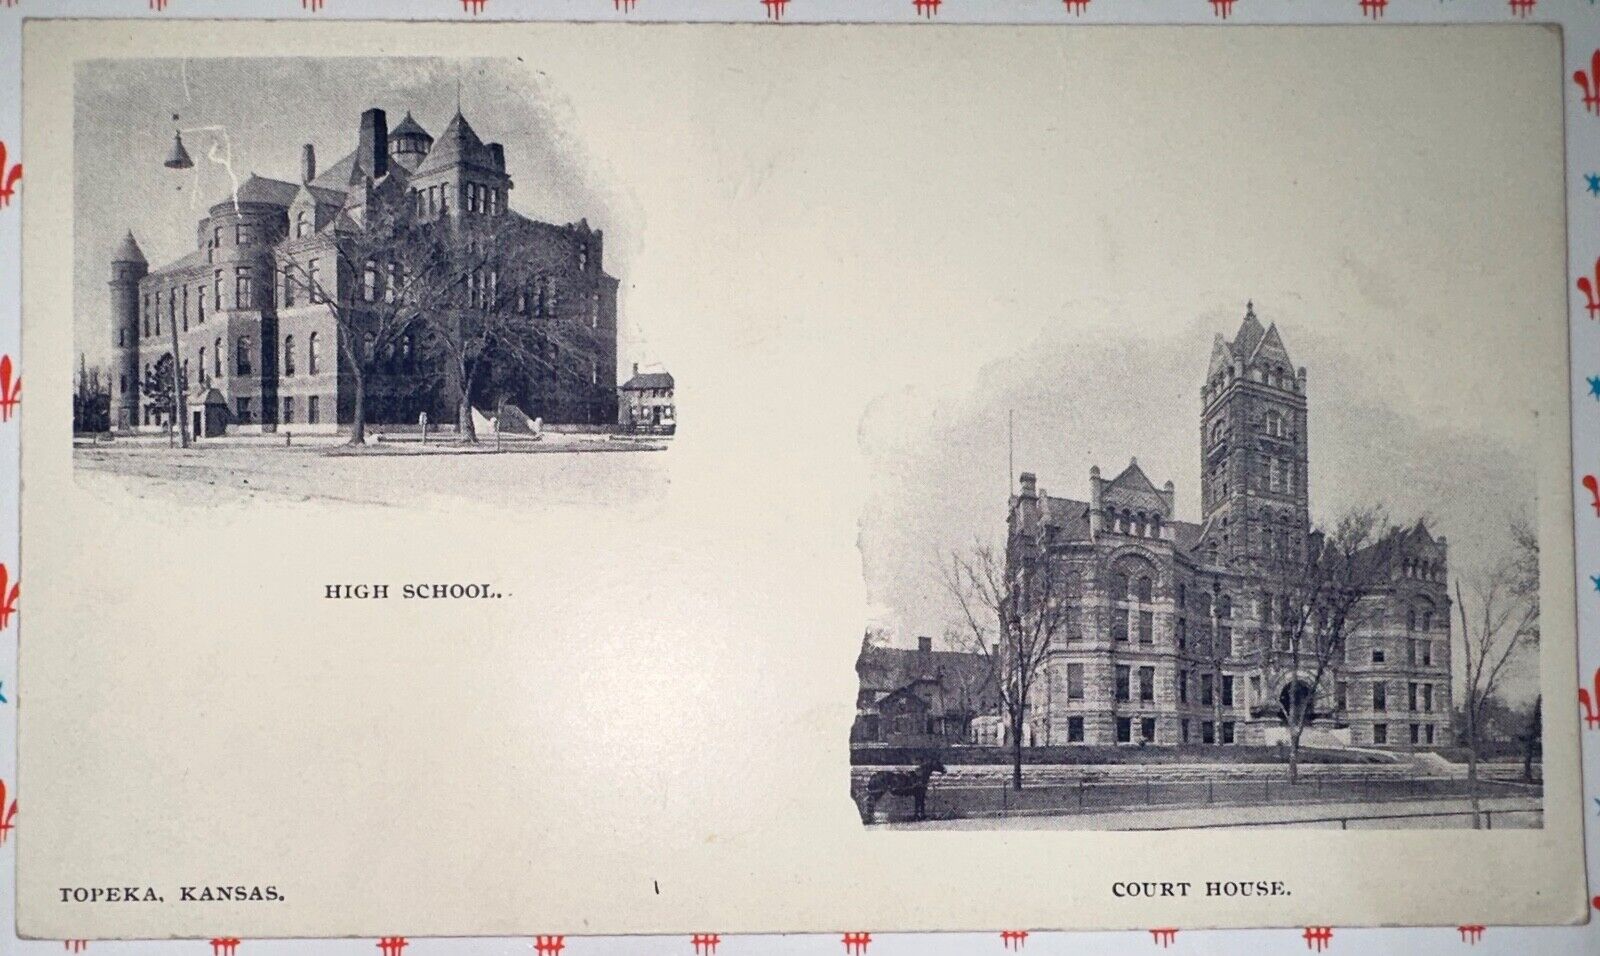 Topeka Kansas High School Court House Postcard 1900s